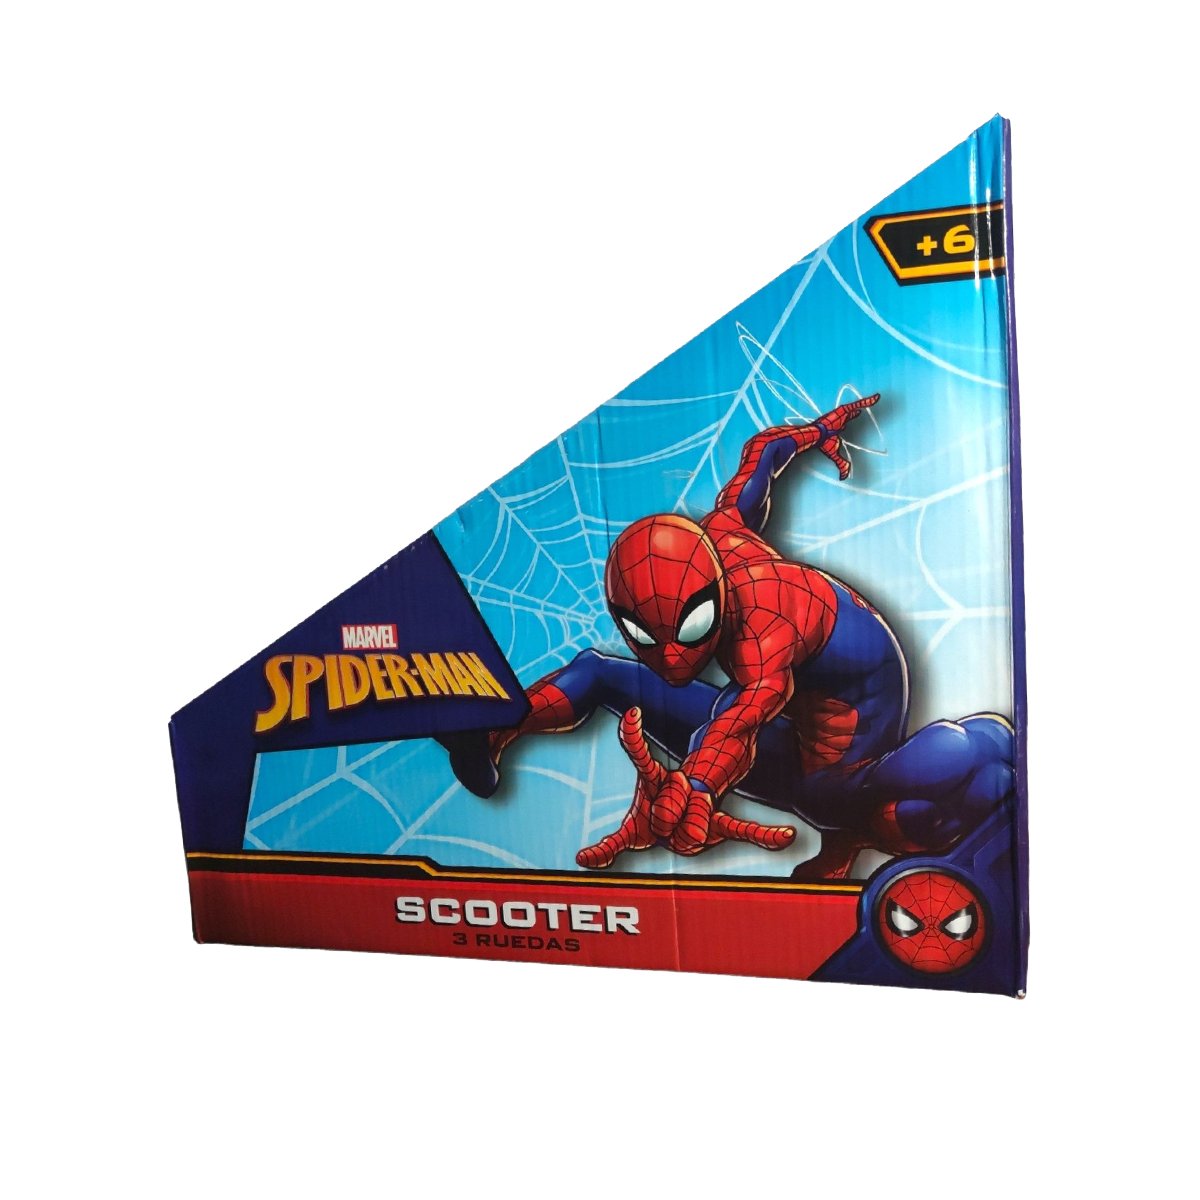 Patinete para Niños Spider-Man